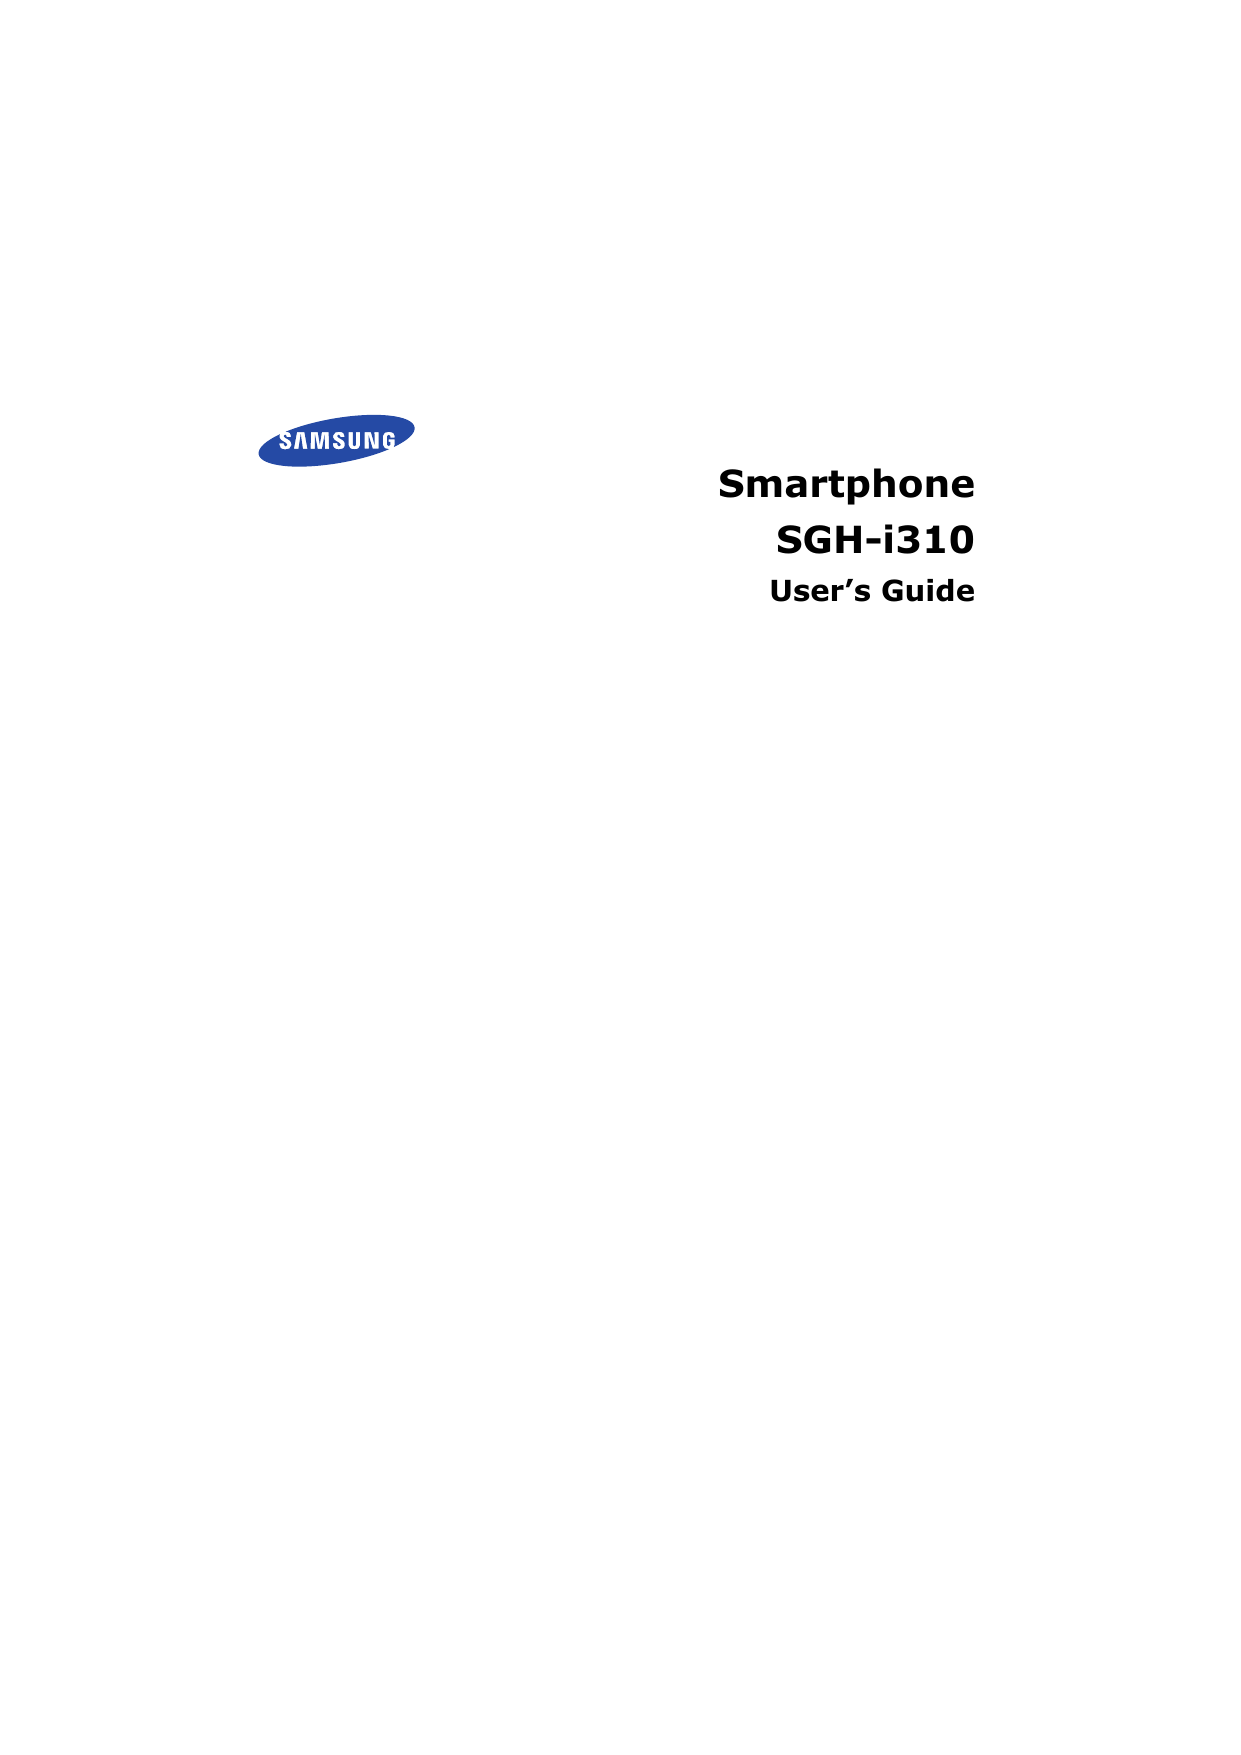 SmartphoneSGH-i310User’s Guide